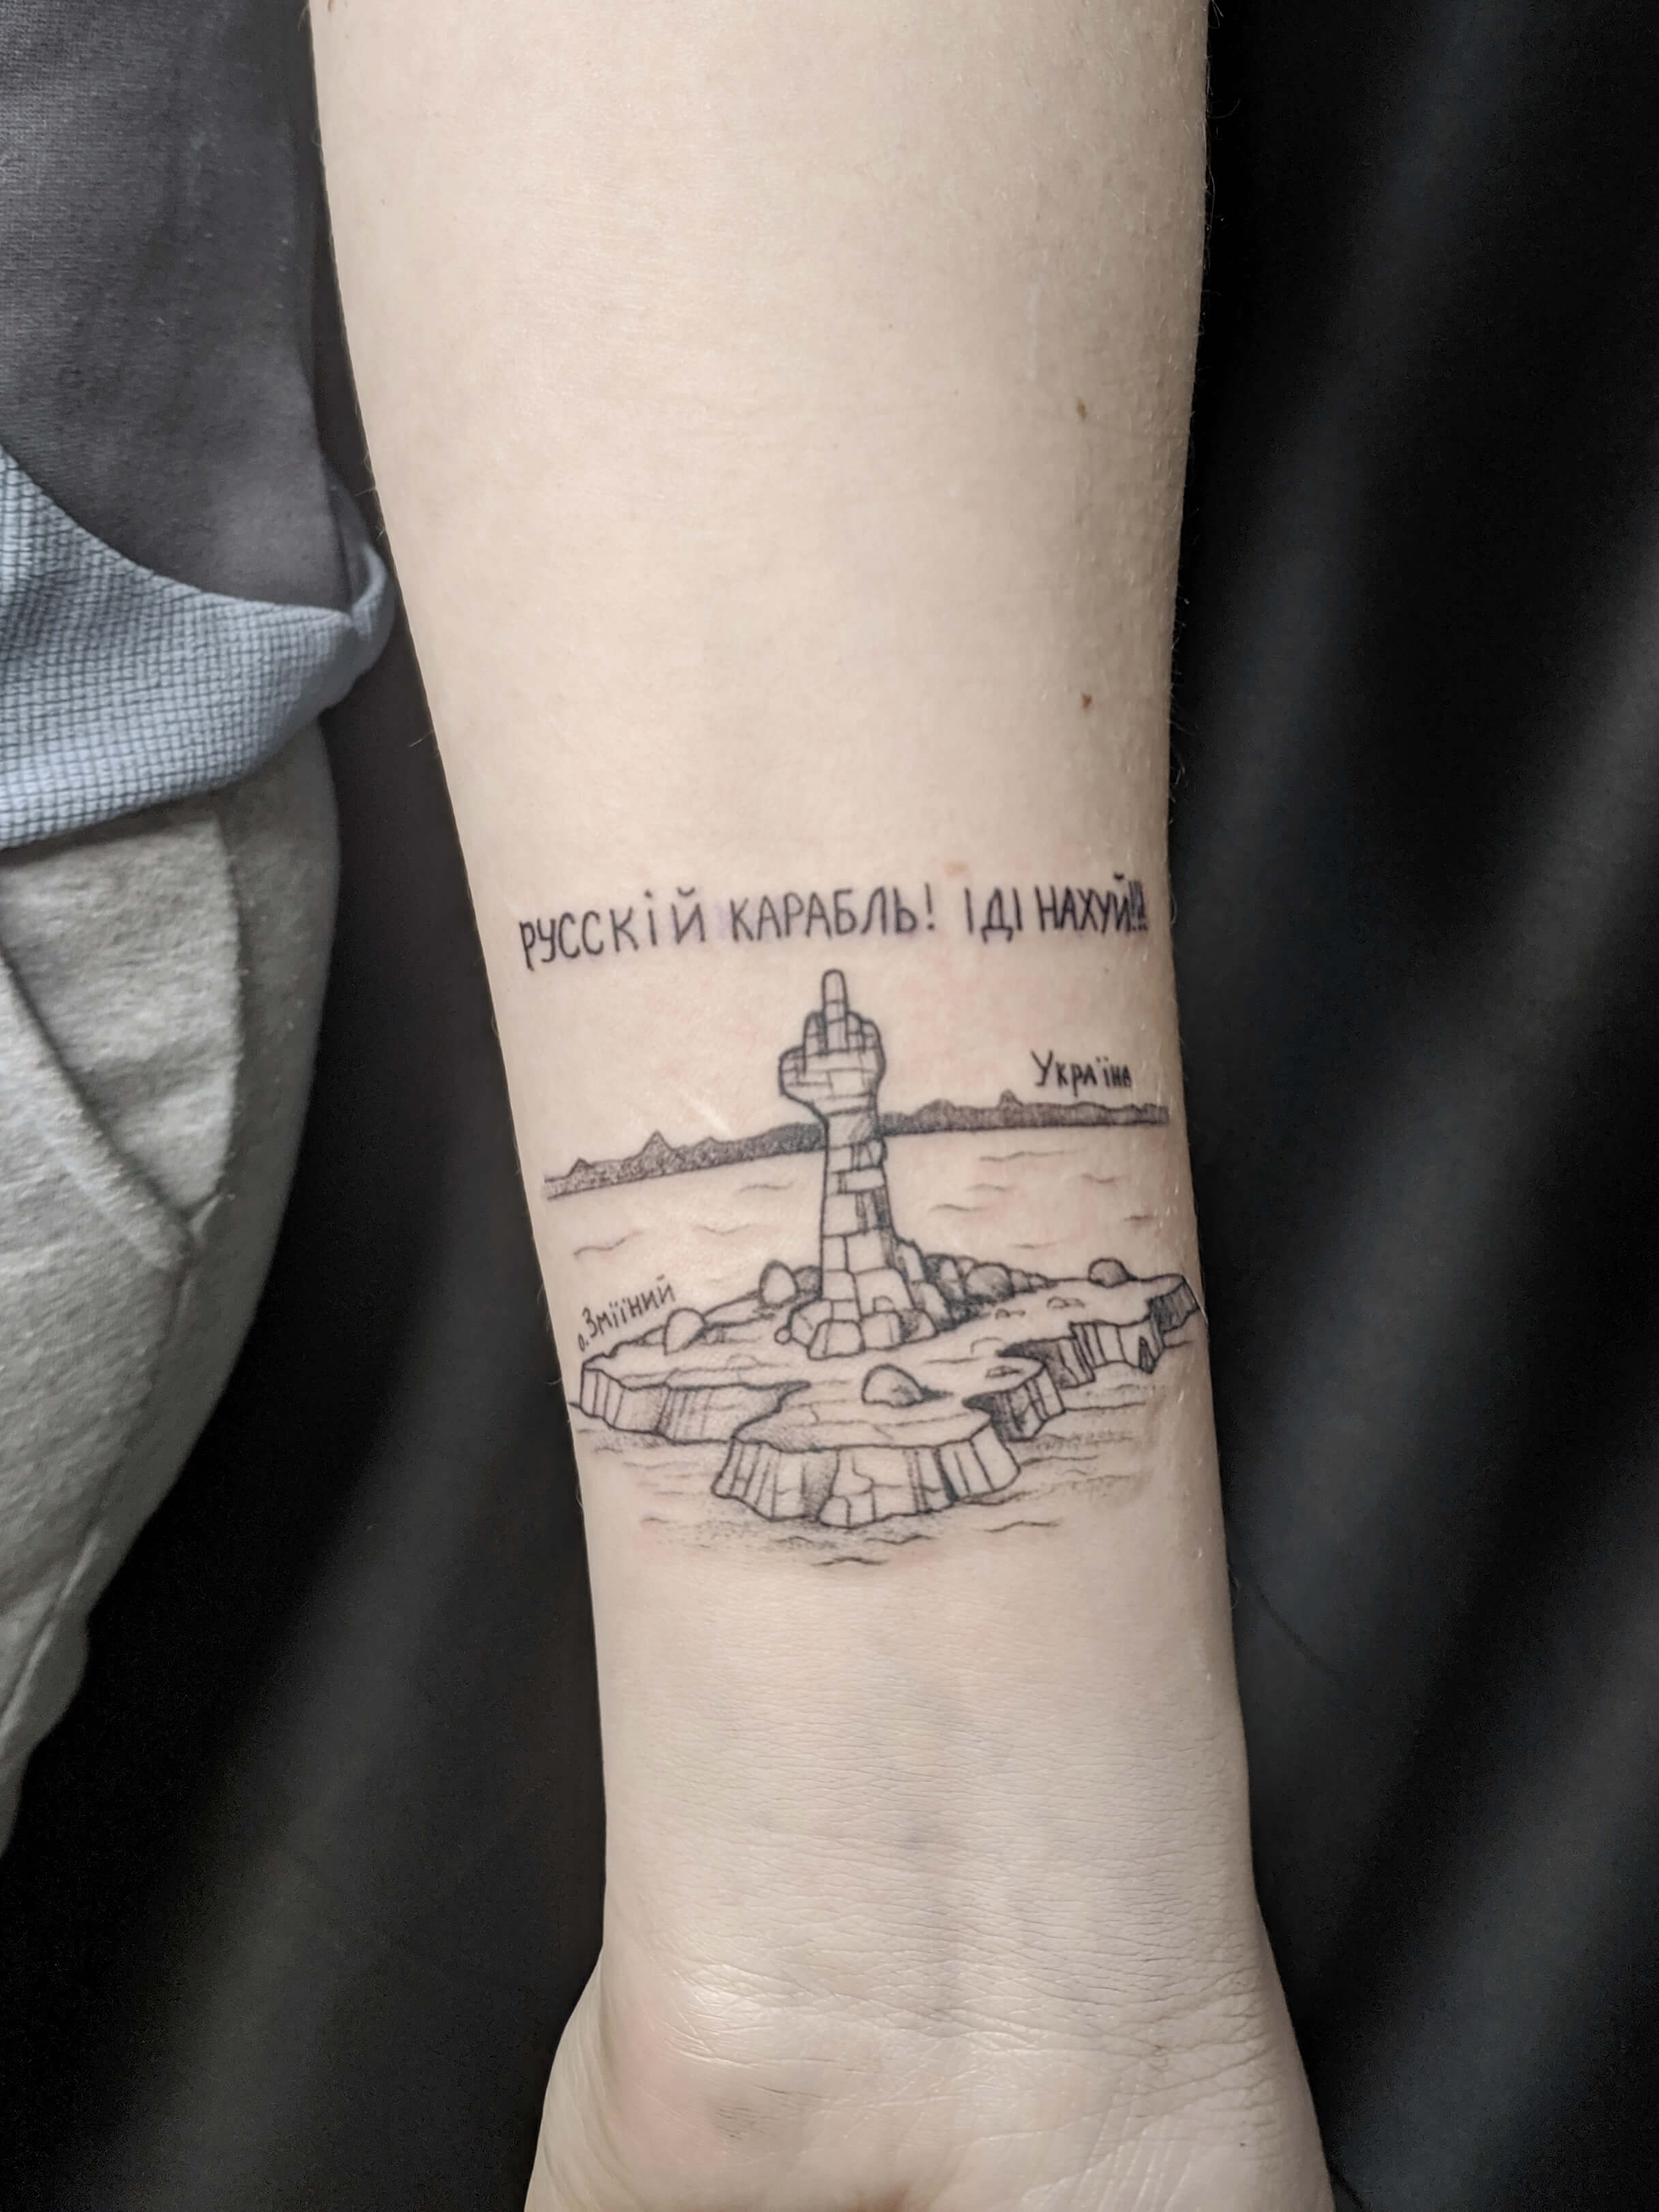 Tattoo uploaded by Samantha • Representing Ukrainian heritage • Tattoodo